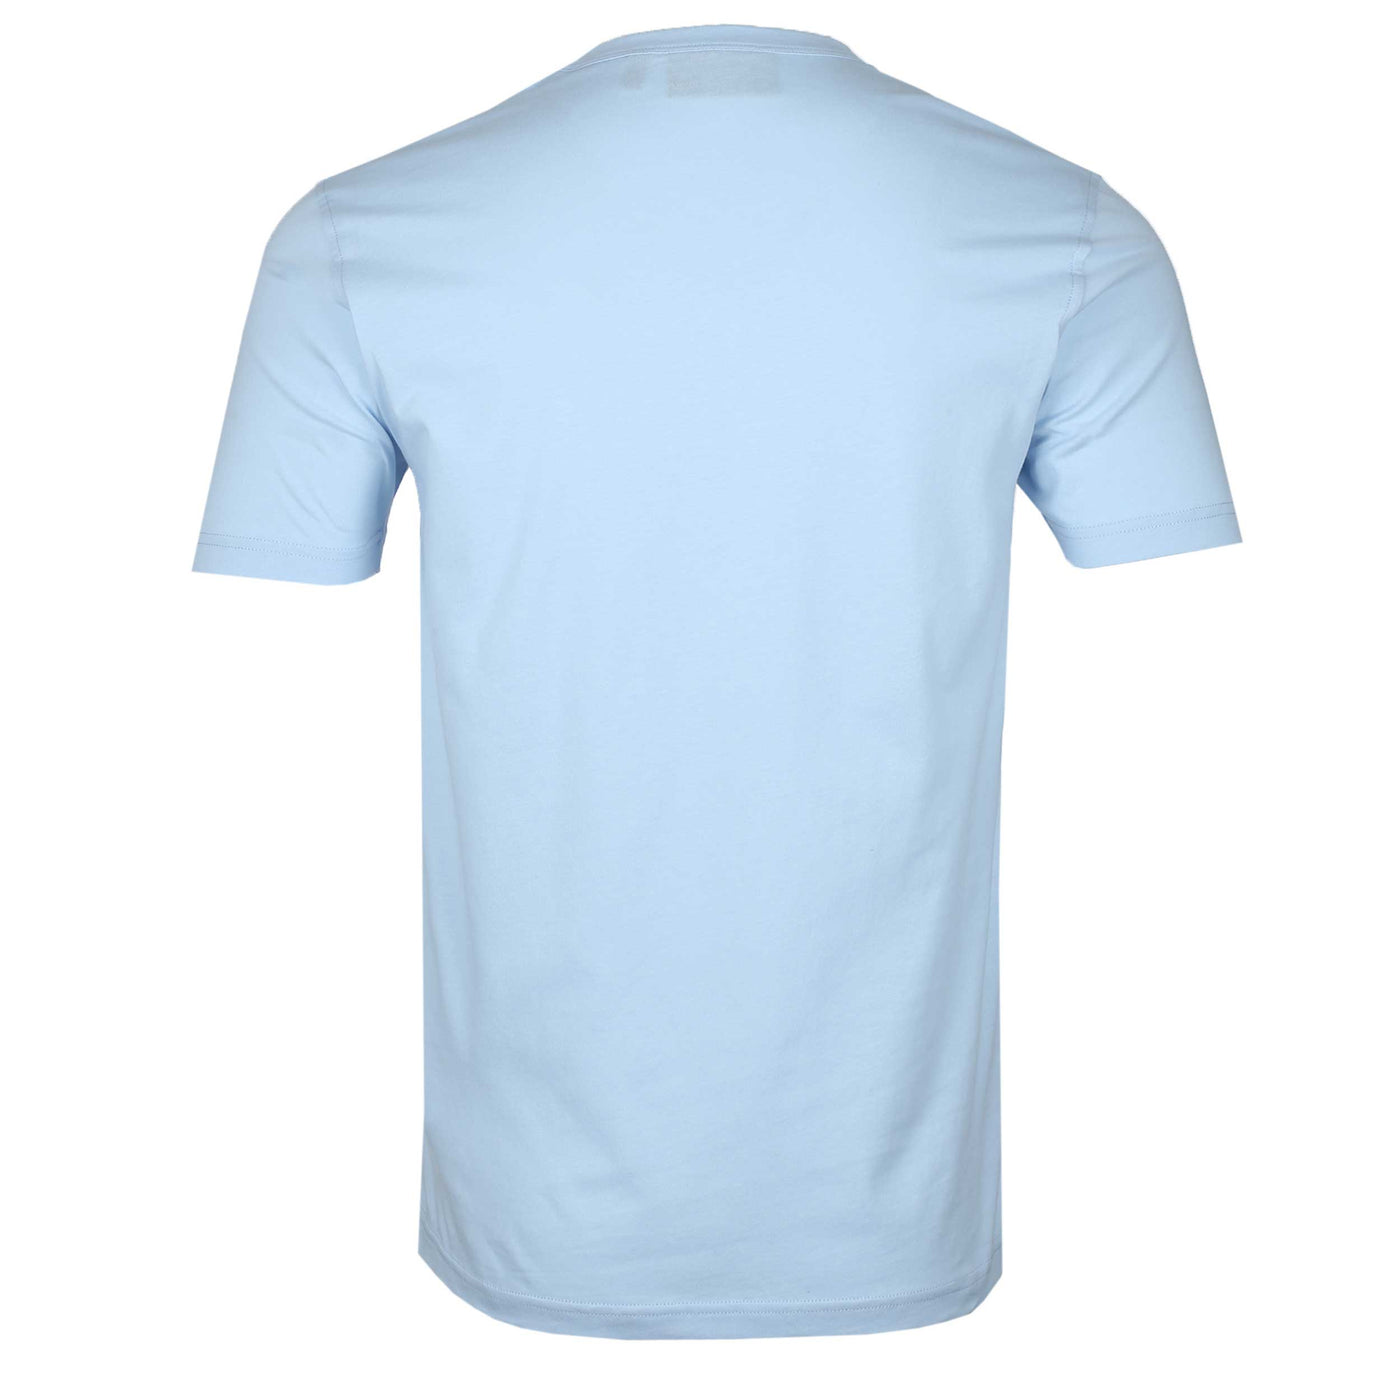 Belstaff Classic T-Shirt in Sky Blue